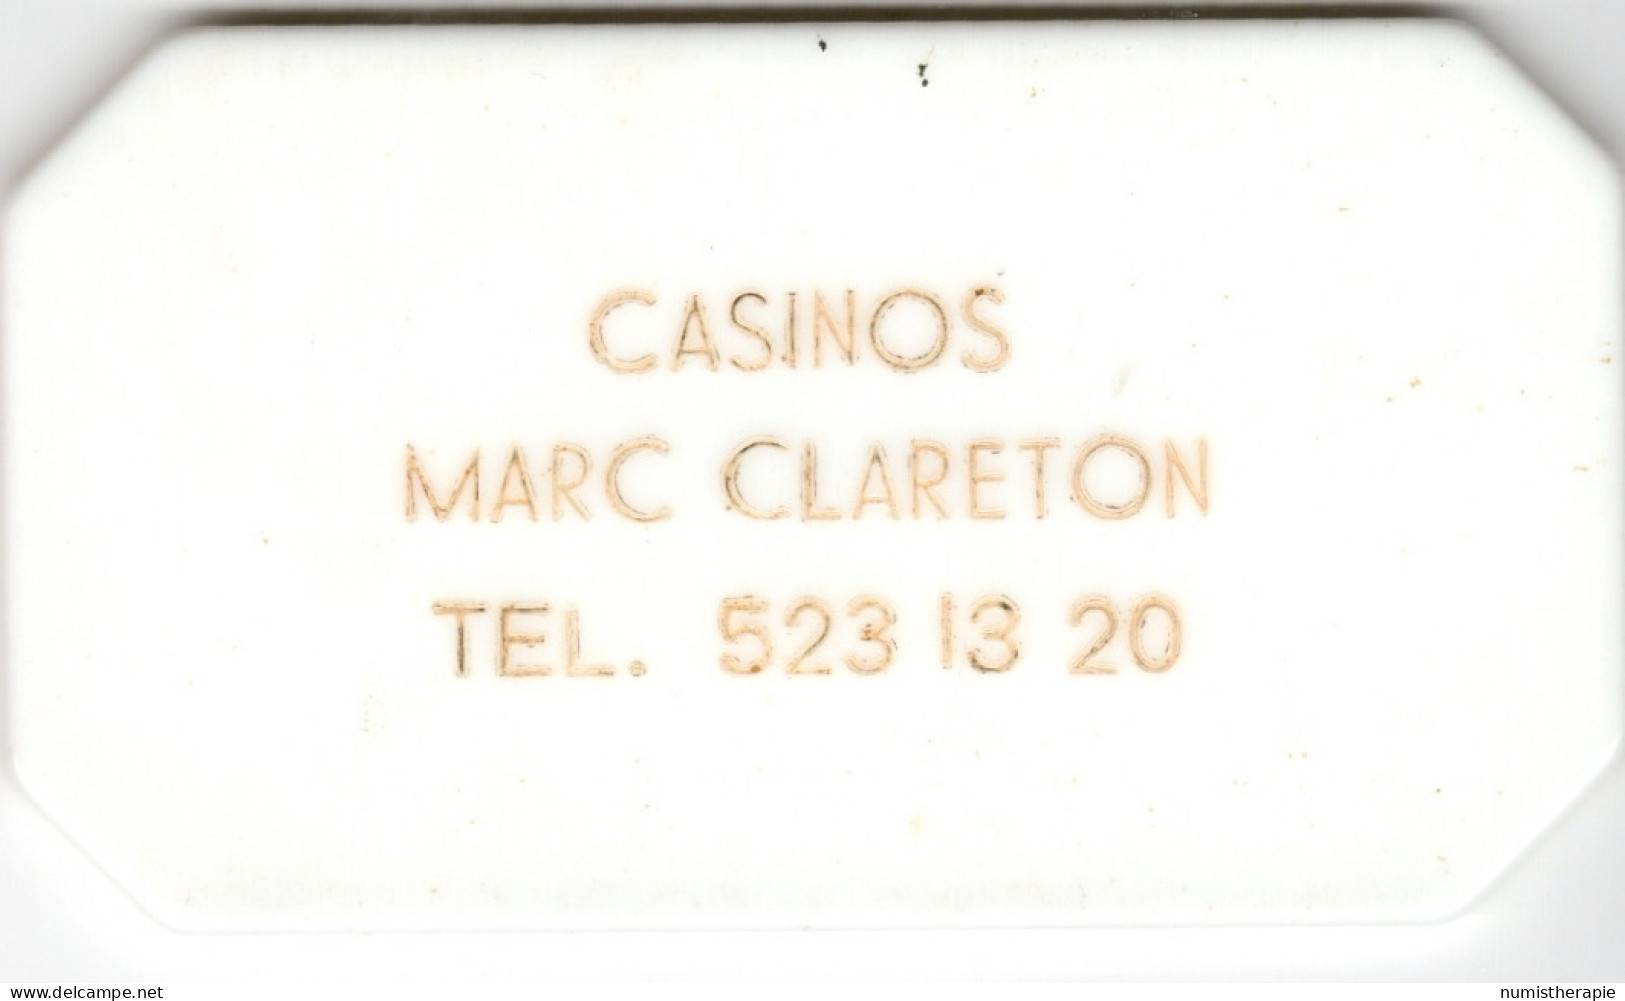 Plaque : Casinos Marc Clareton Tél. 523 13 20 (89mm X 50mm) - Casino